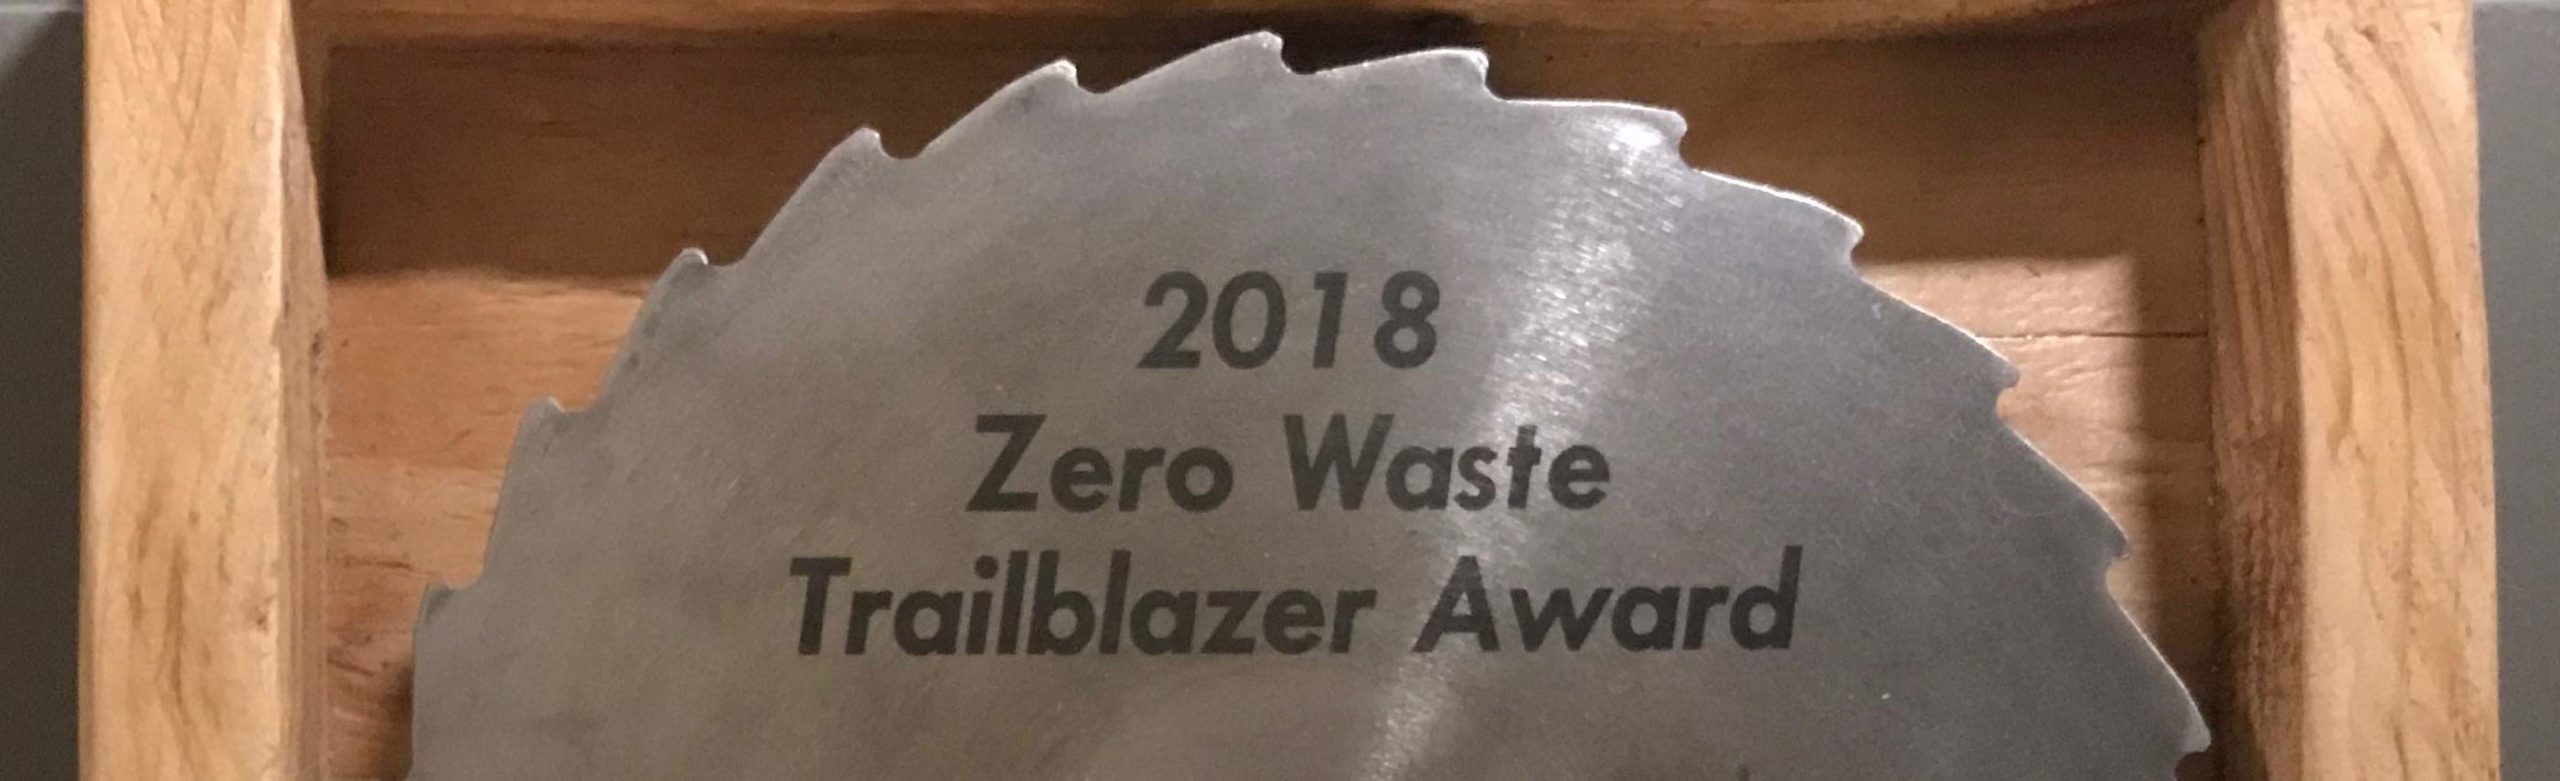 Home Resource Gives Logjam 2018 Zero Waste Trailblazer Award Image